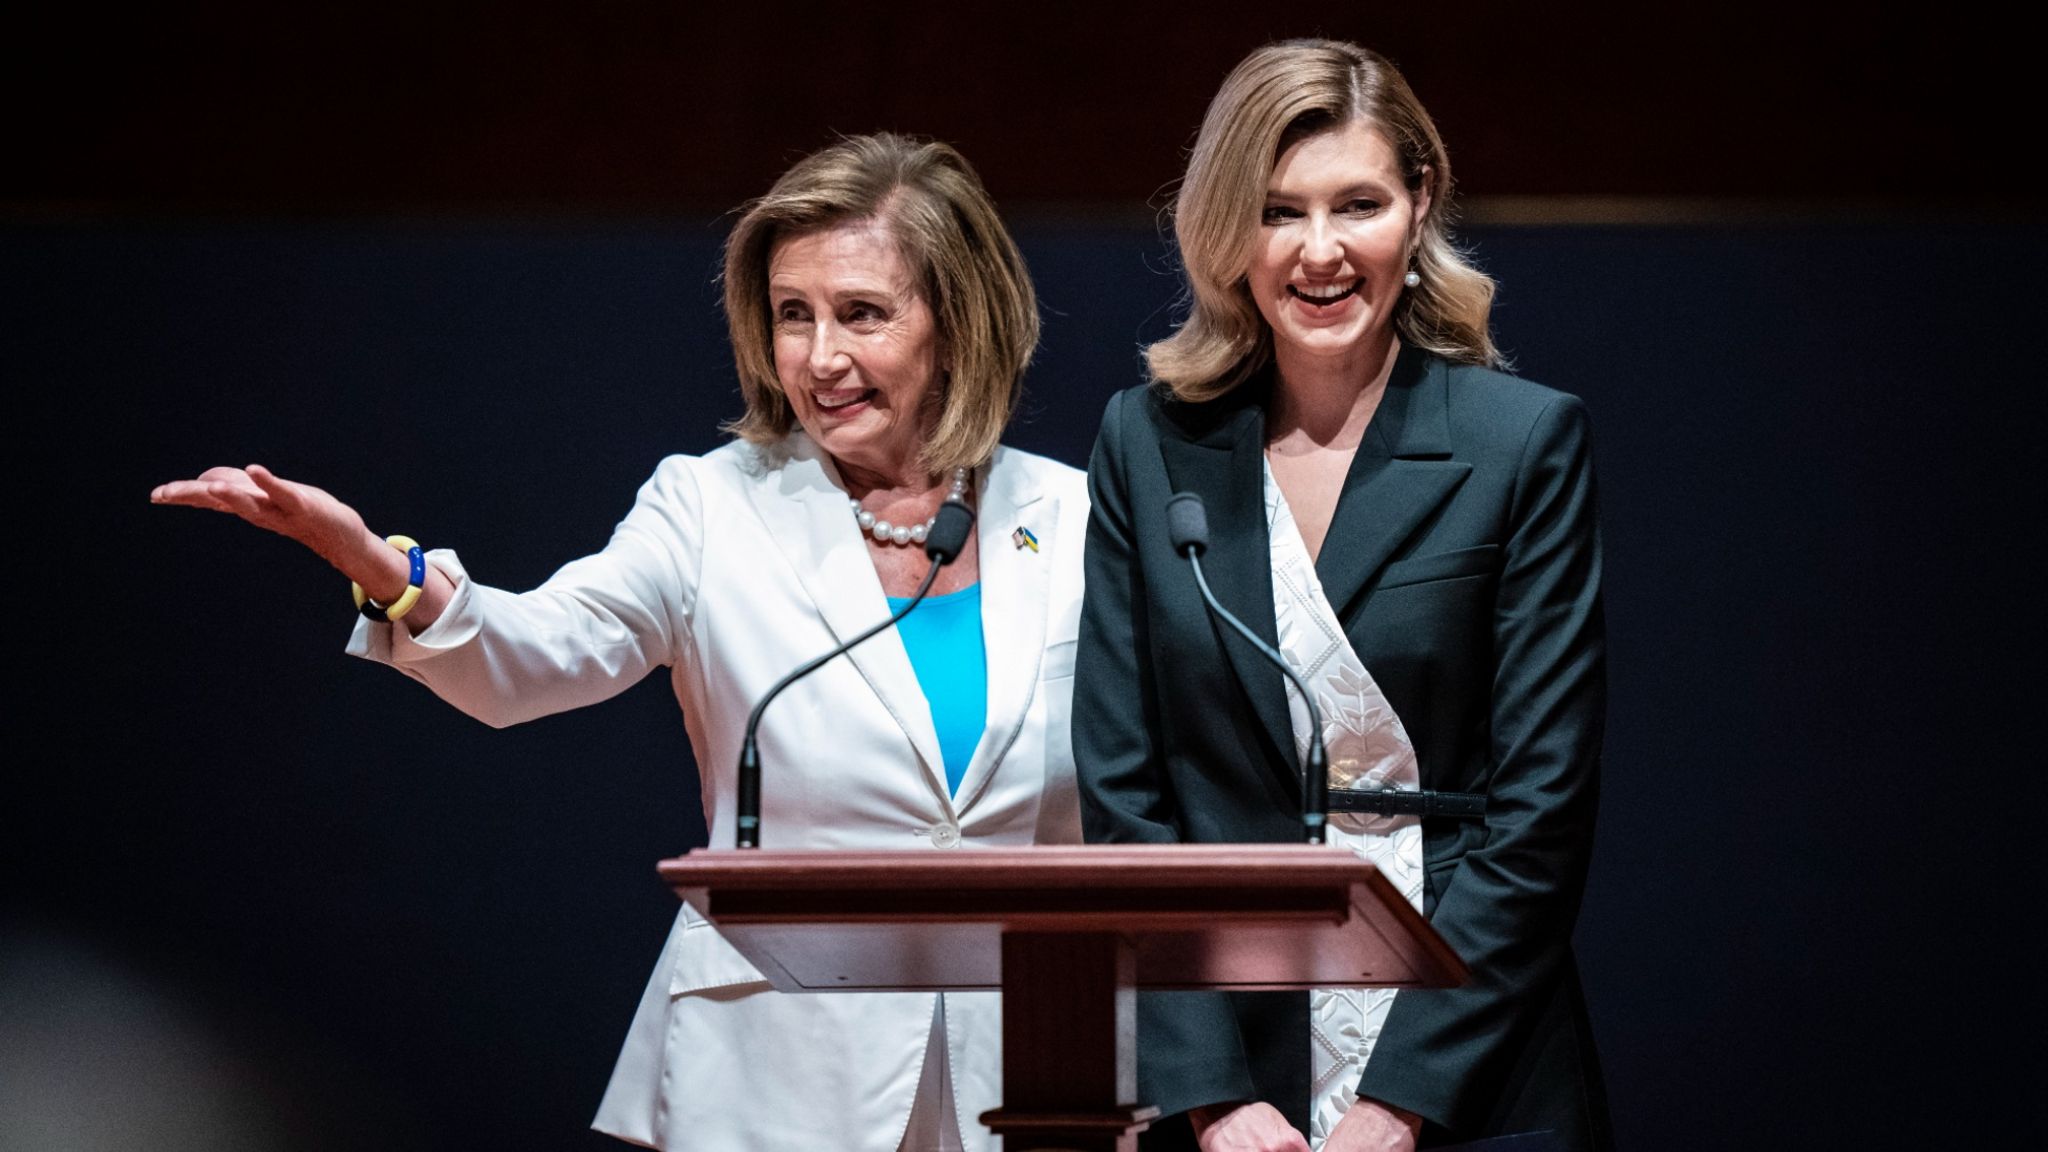 Olena Zelenska - pictured with House speaker Nancy Pelosi - never liked public speaking